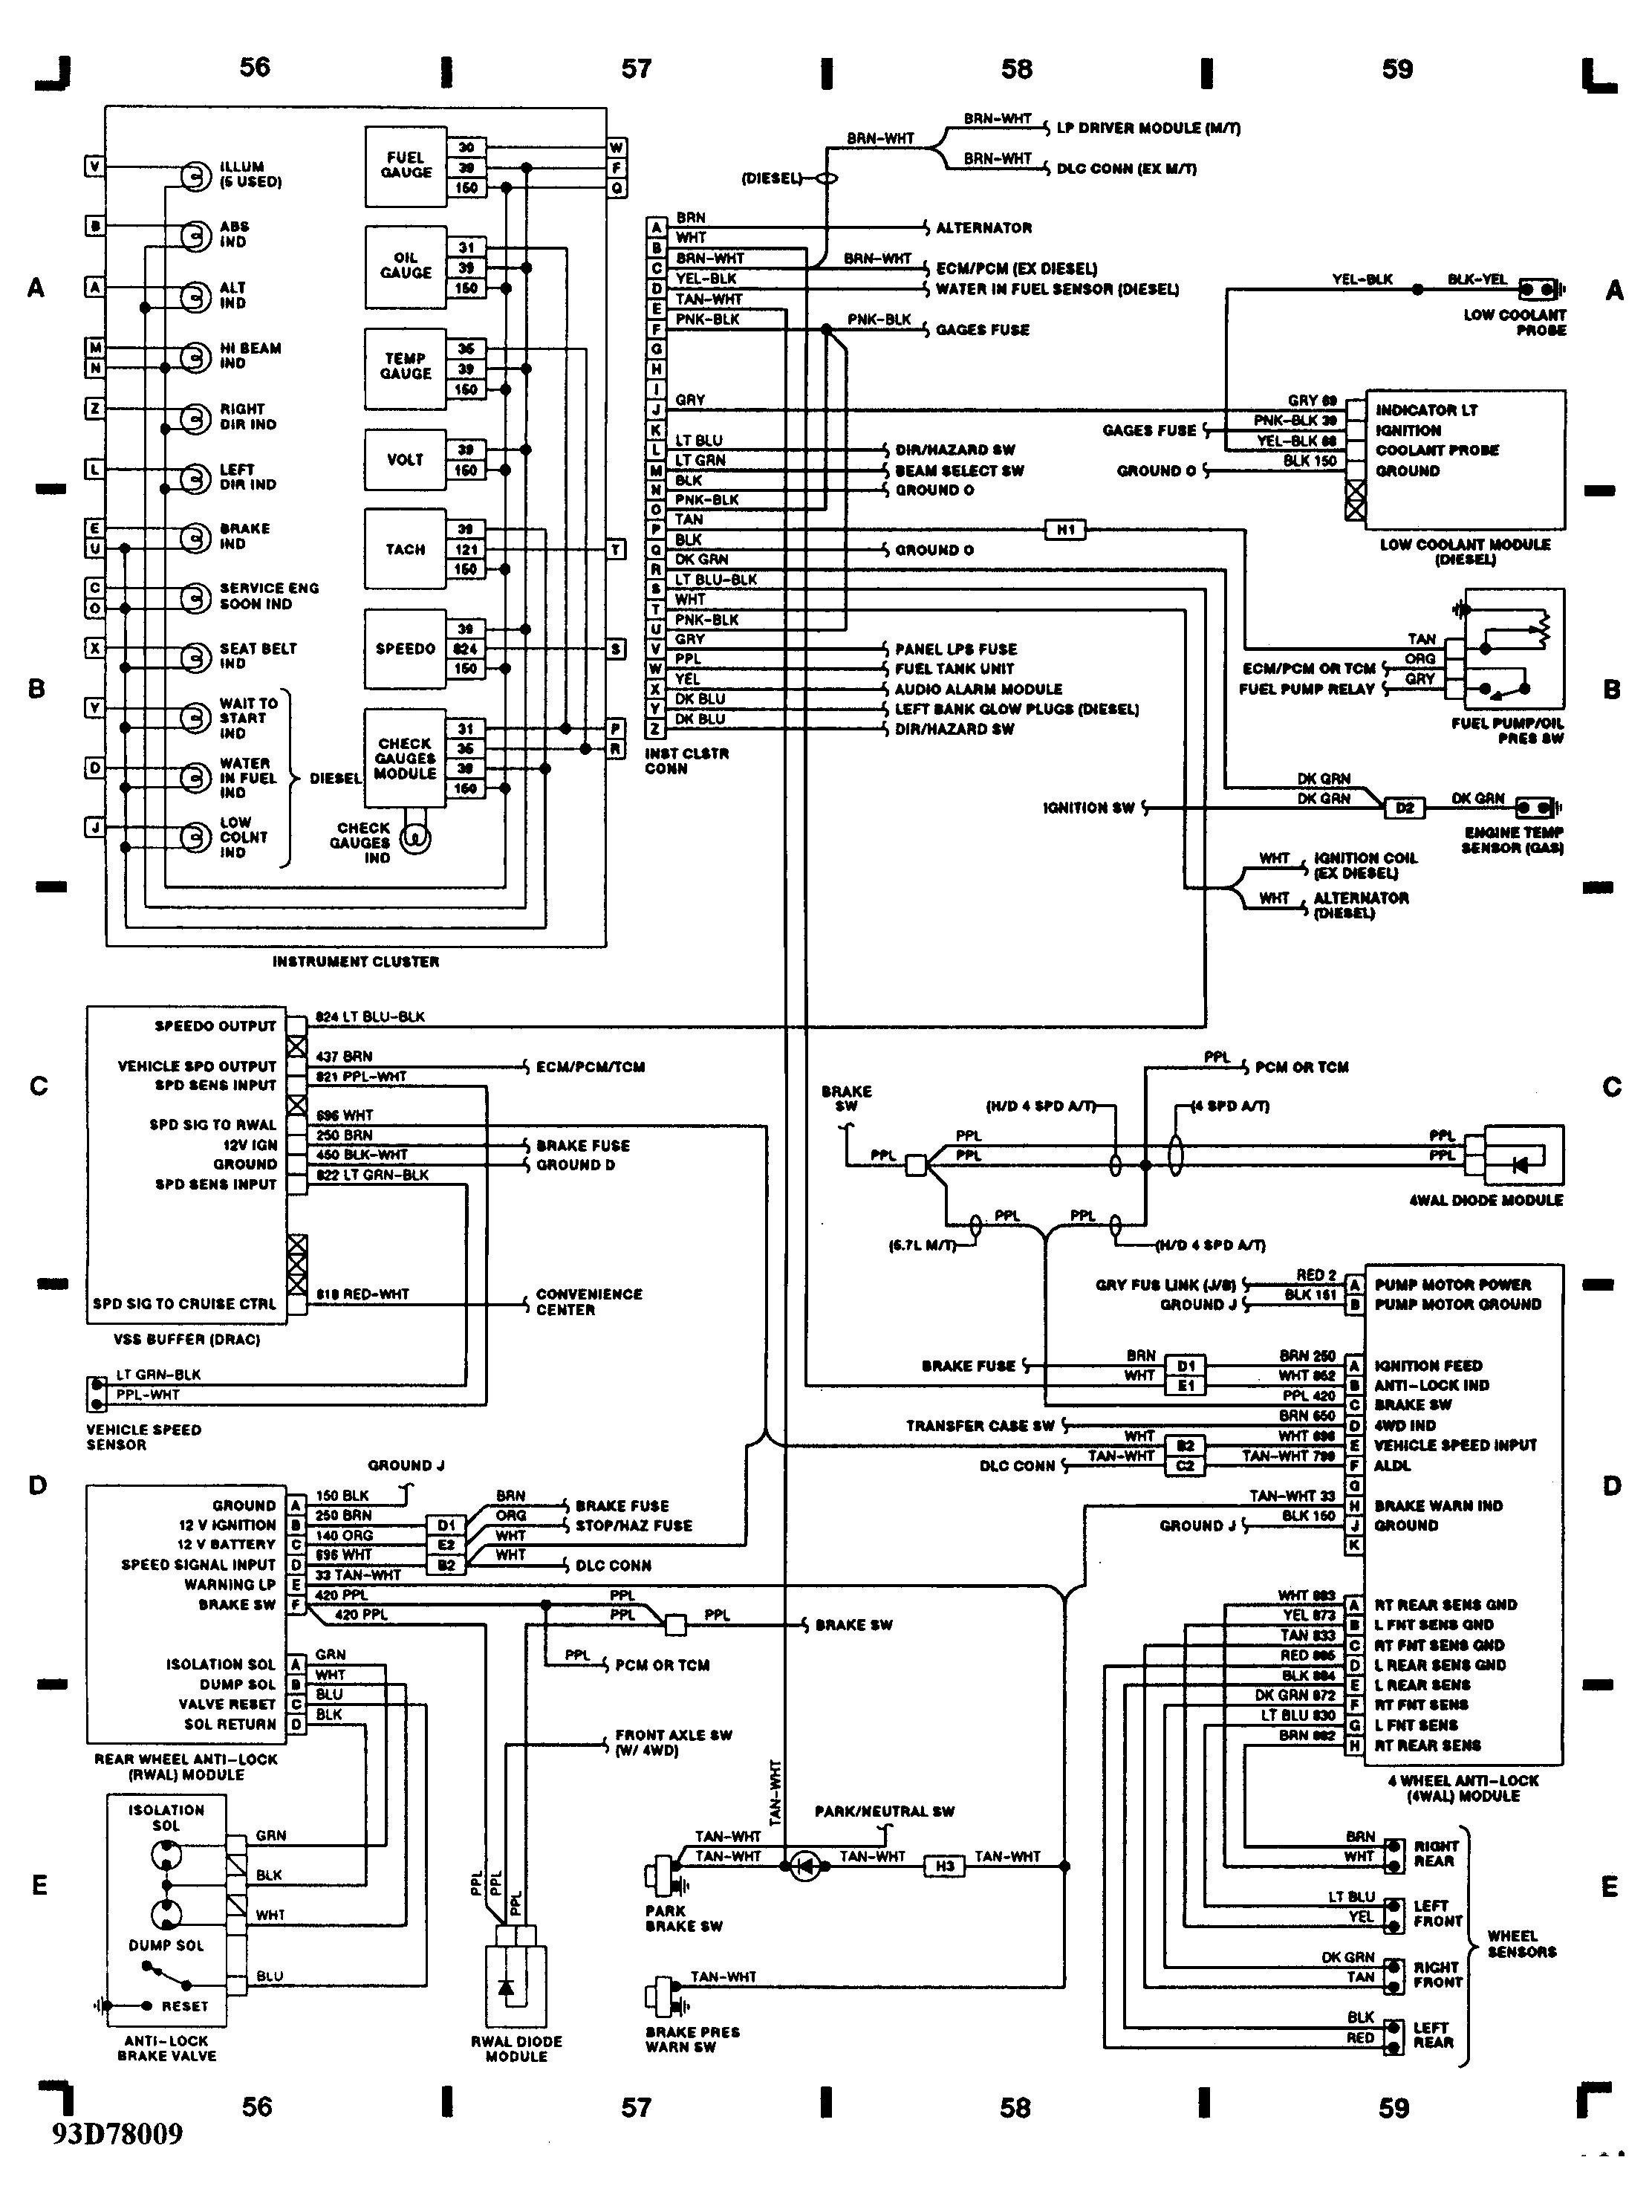 Chevy Wiring Schematic - Wiring Diagrams